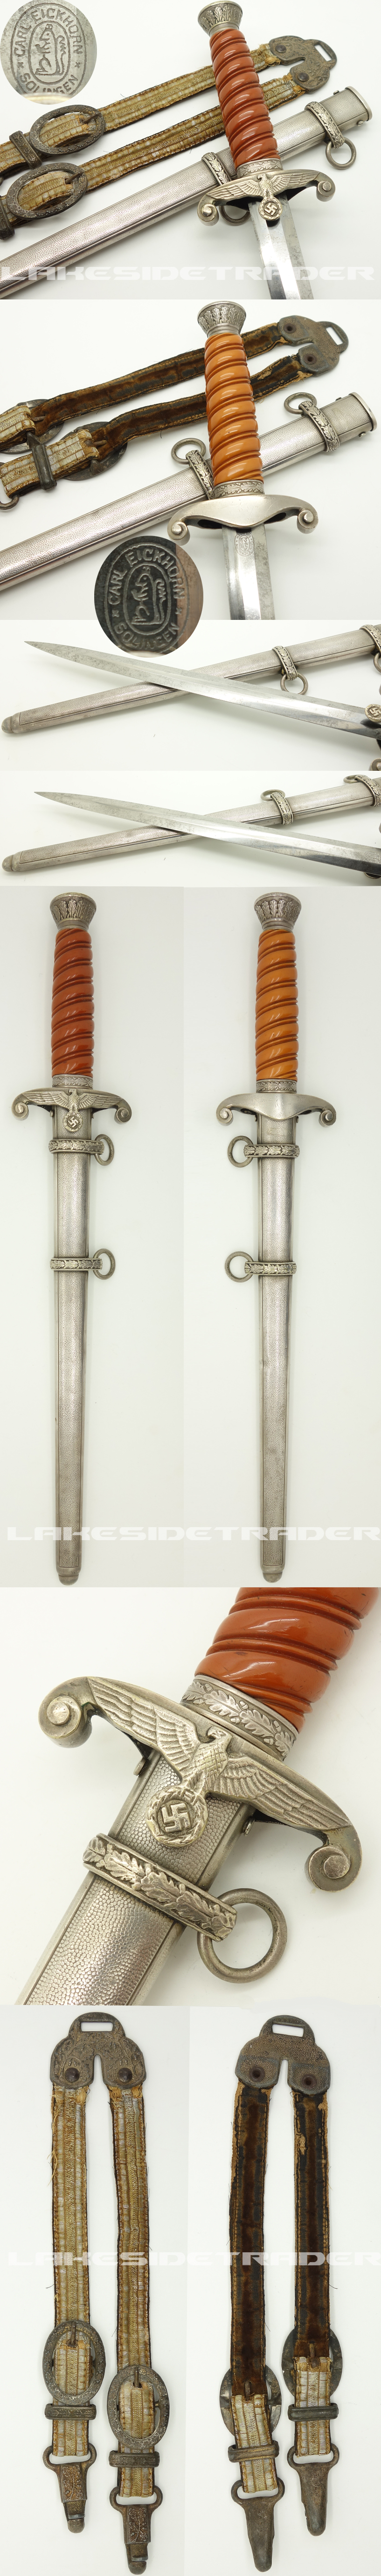 Early Army Dagger by Eickhorn